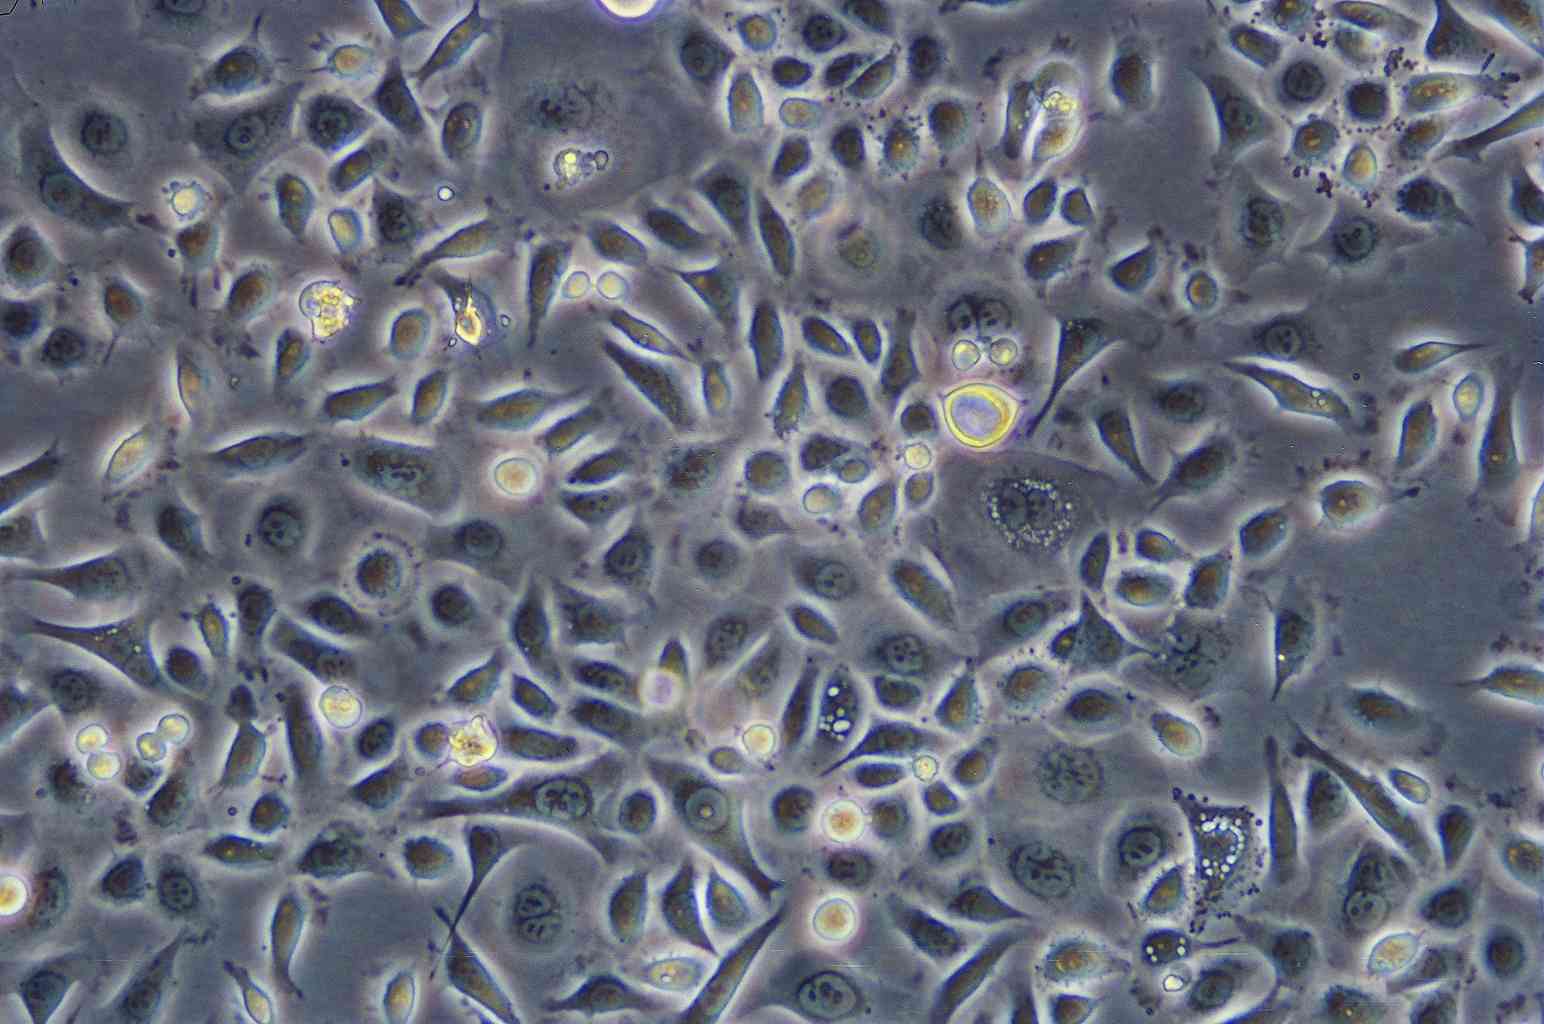 C3H/10T1/2 clone 8 小鼠胚胎成纤维细胞系